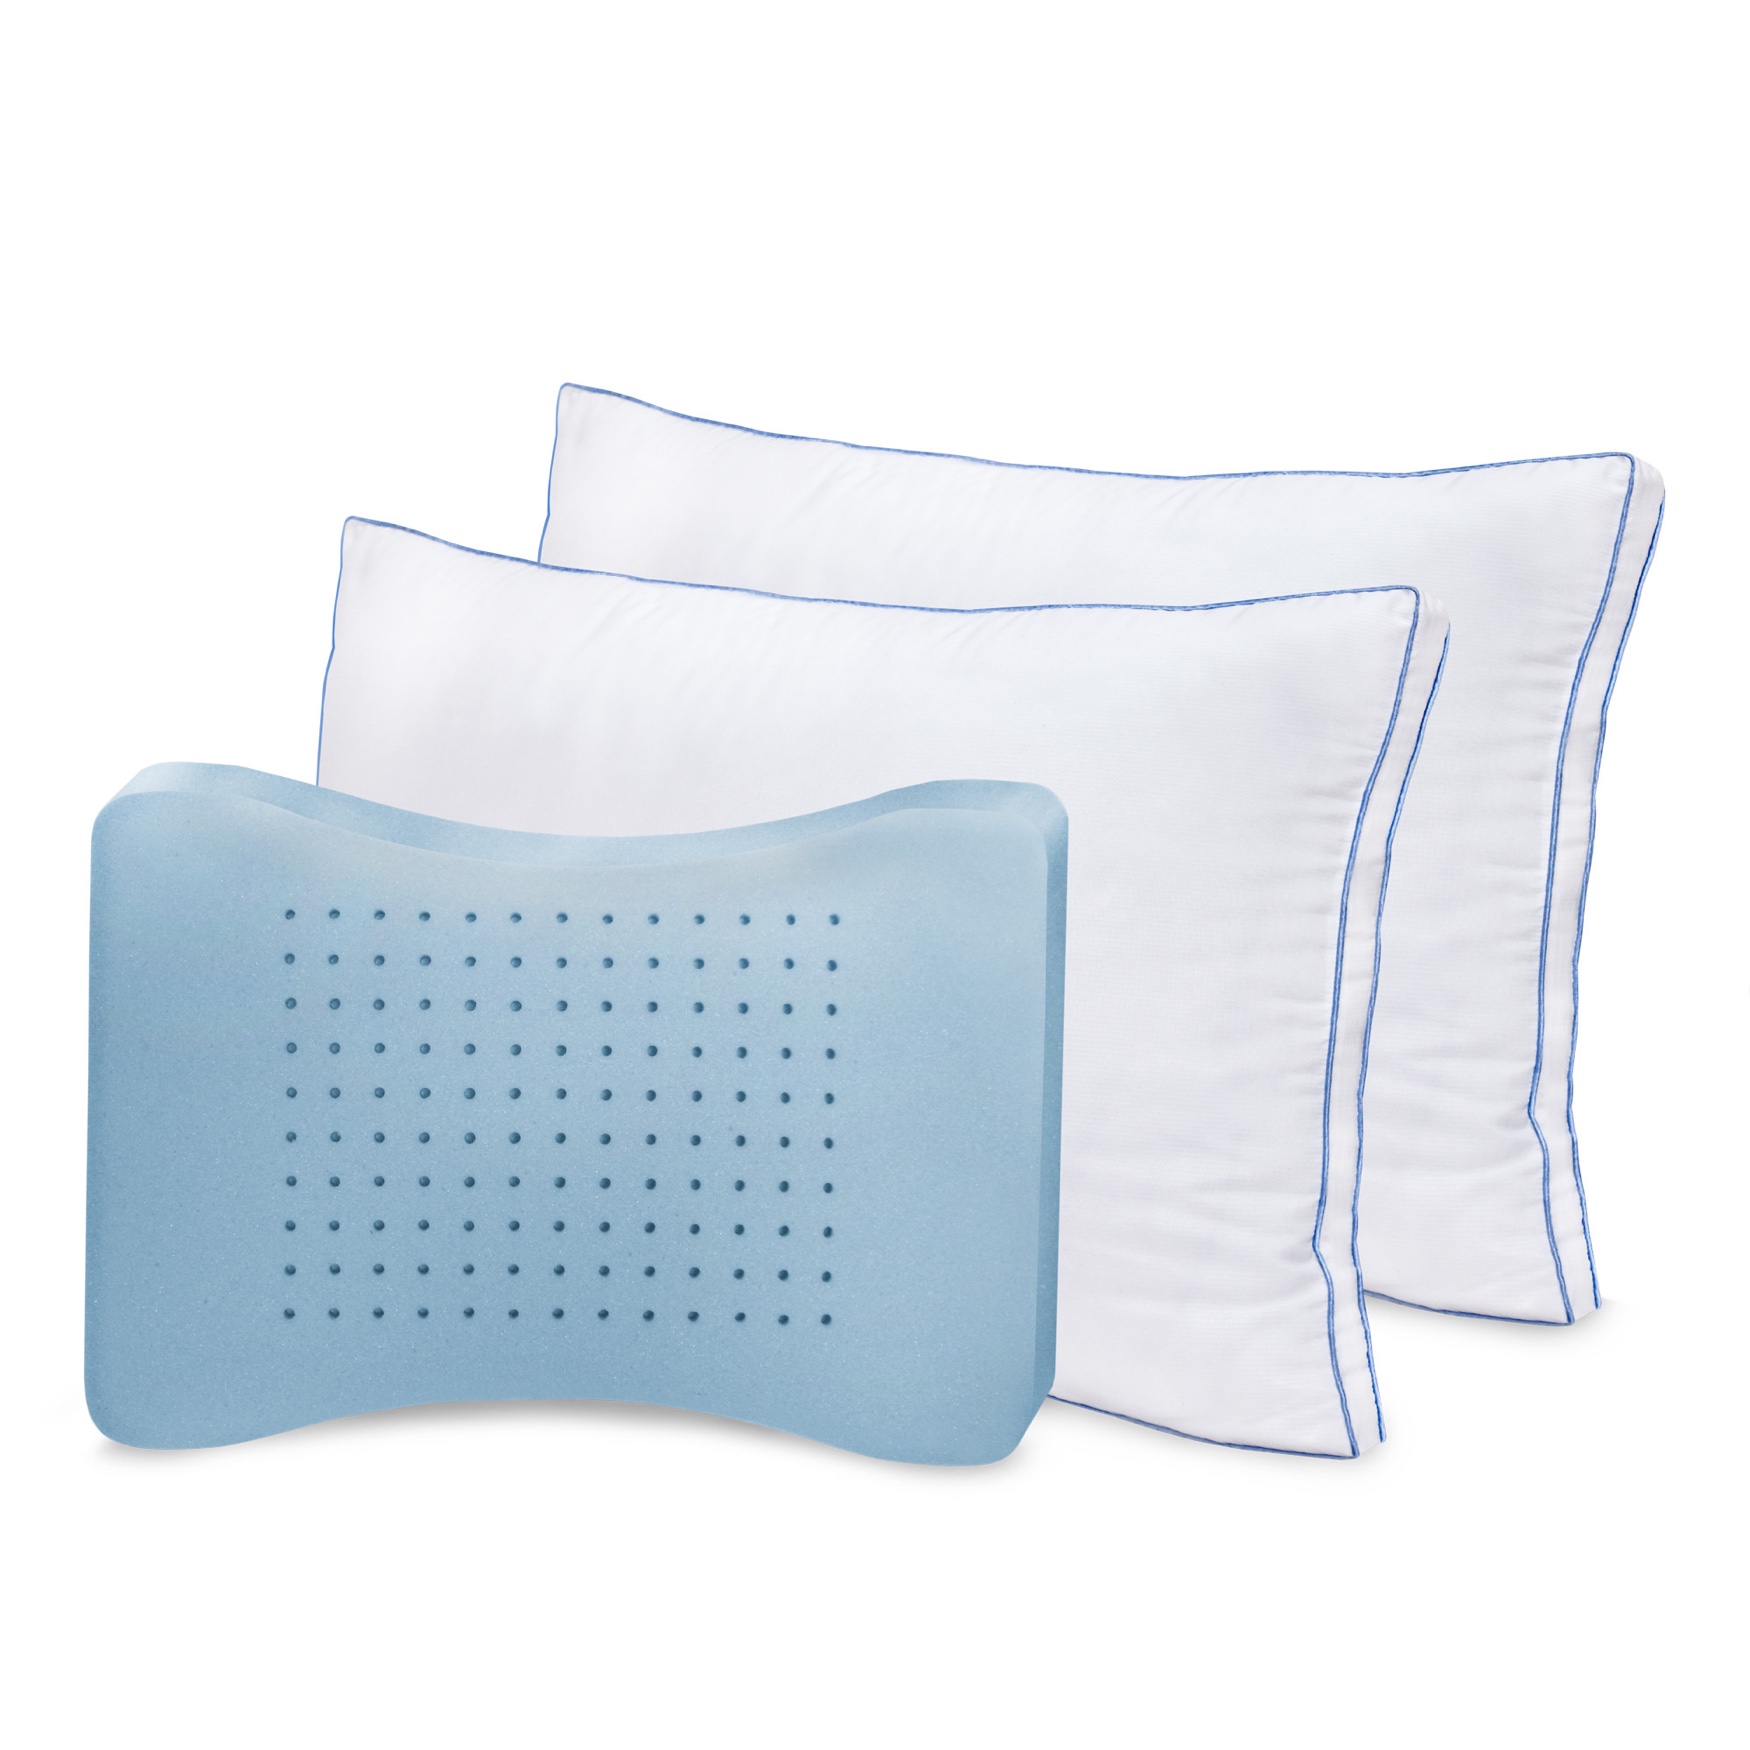 SensorPEDIC MemoryLOFT Deluxe Gusseted Pillow with Memory Foam Center, 